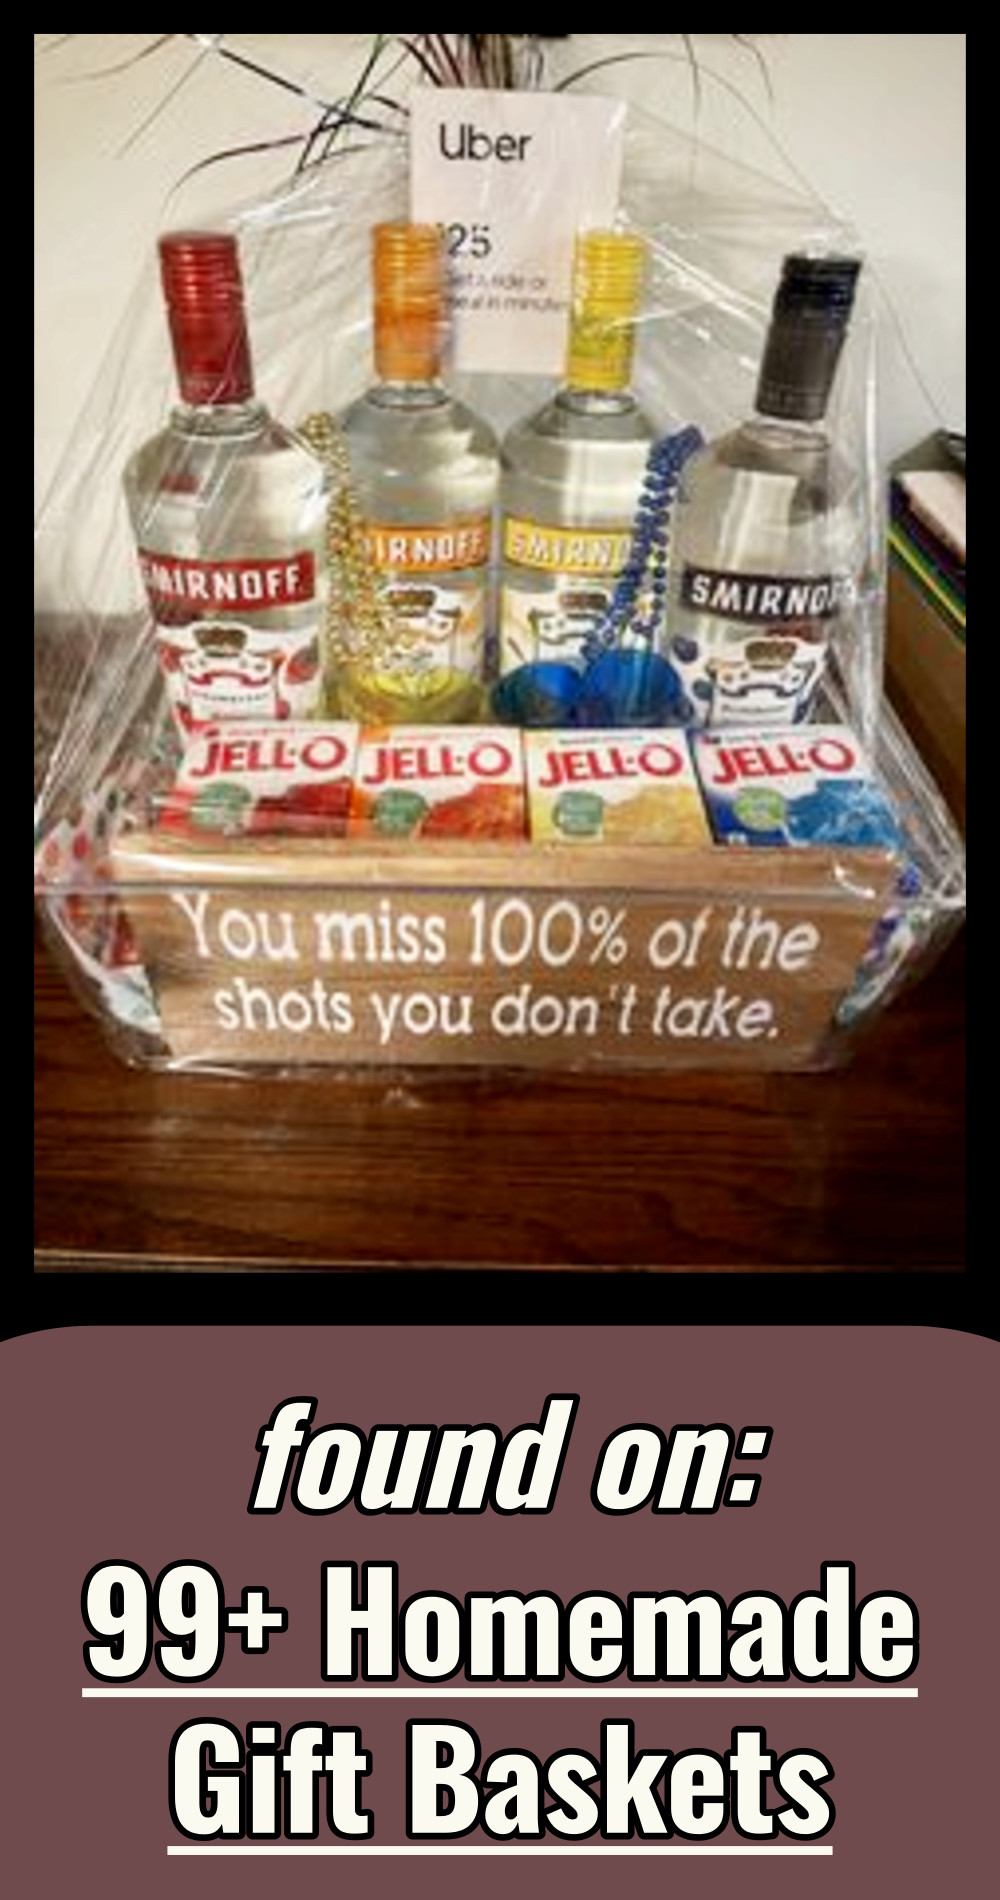 Jello shot raffle gift basket